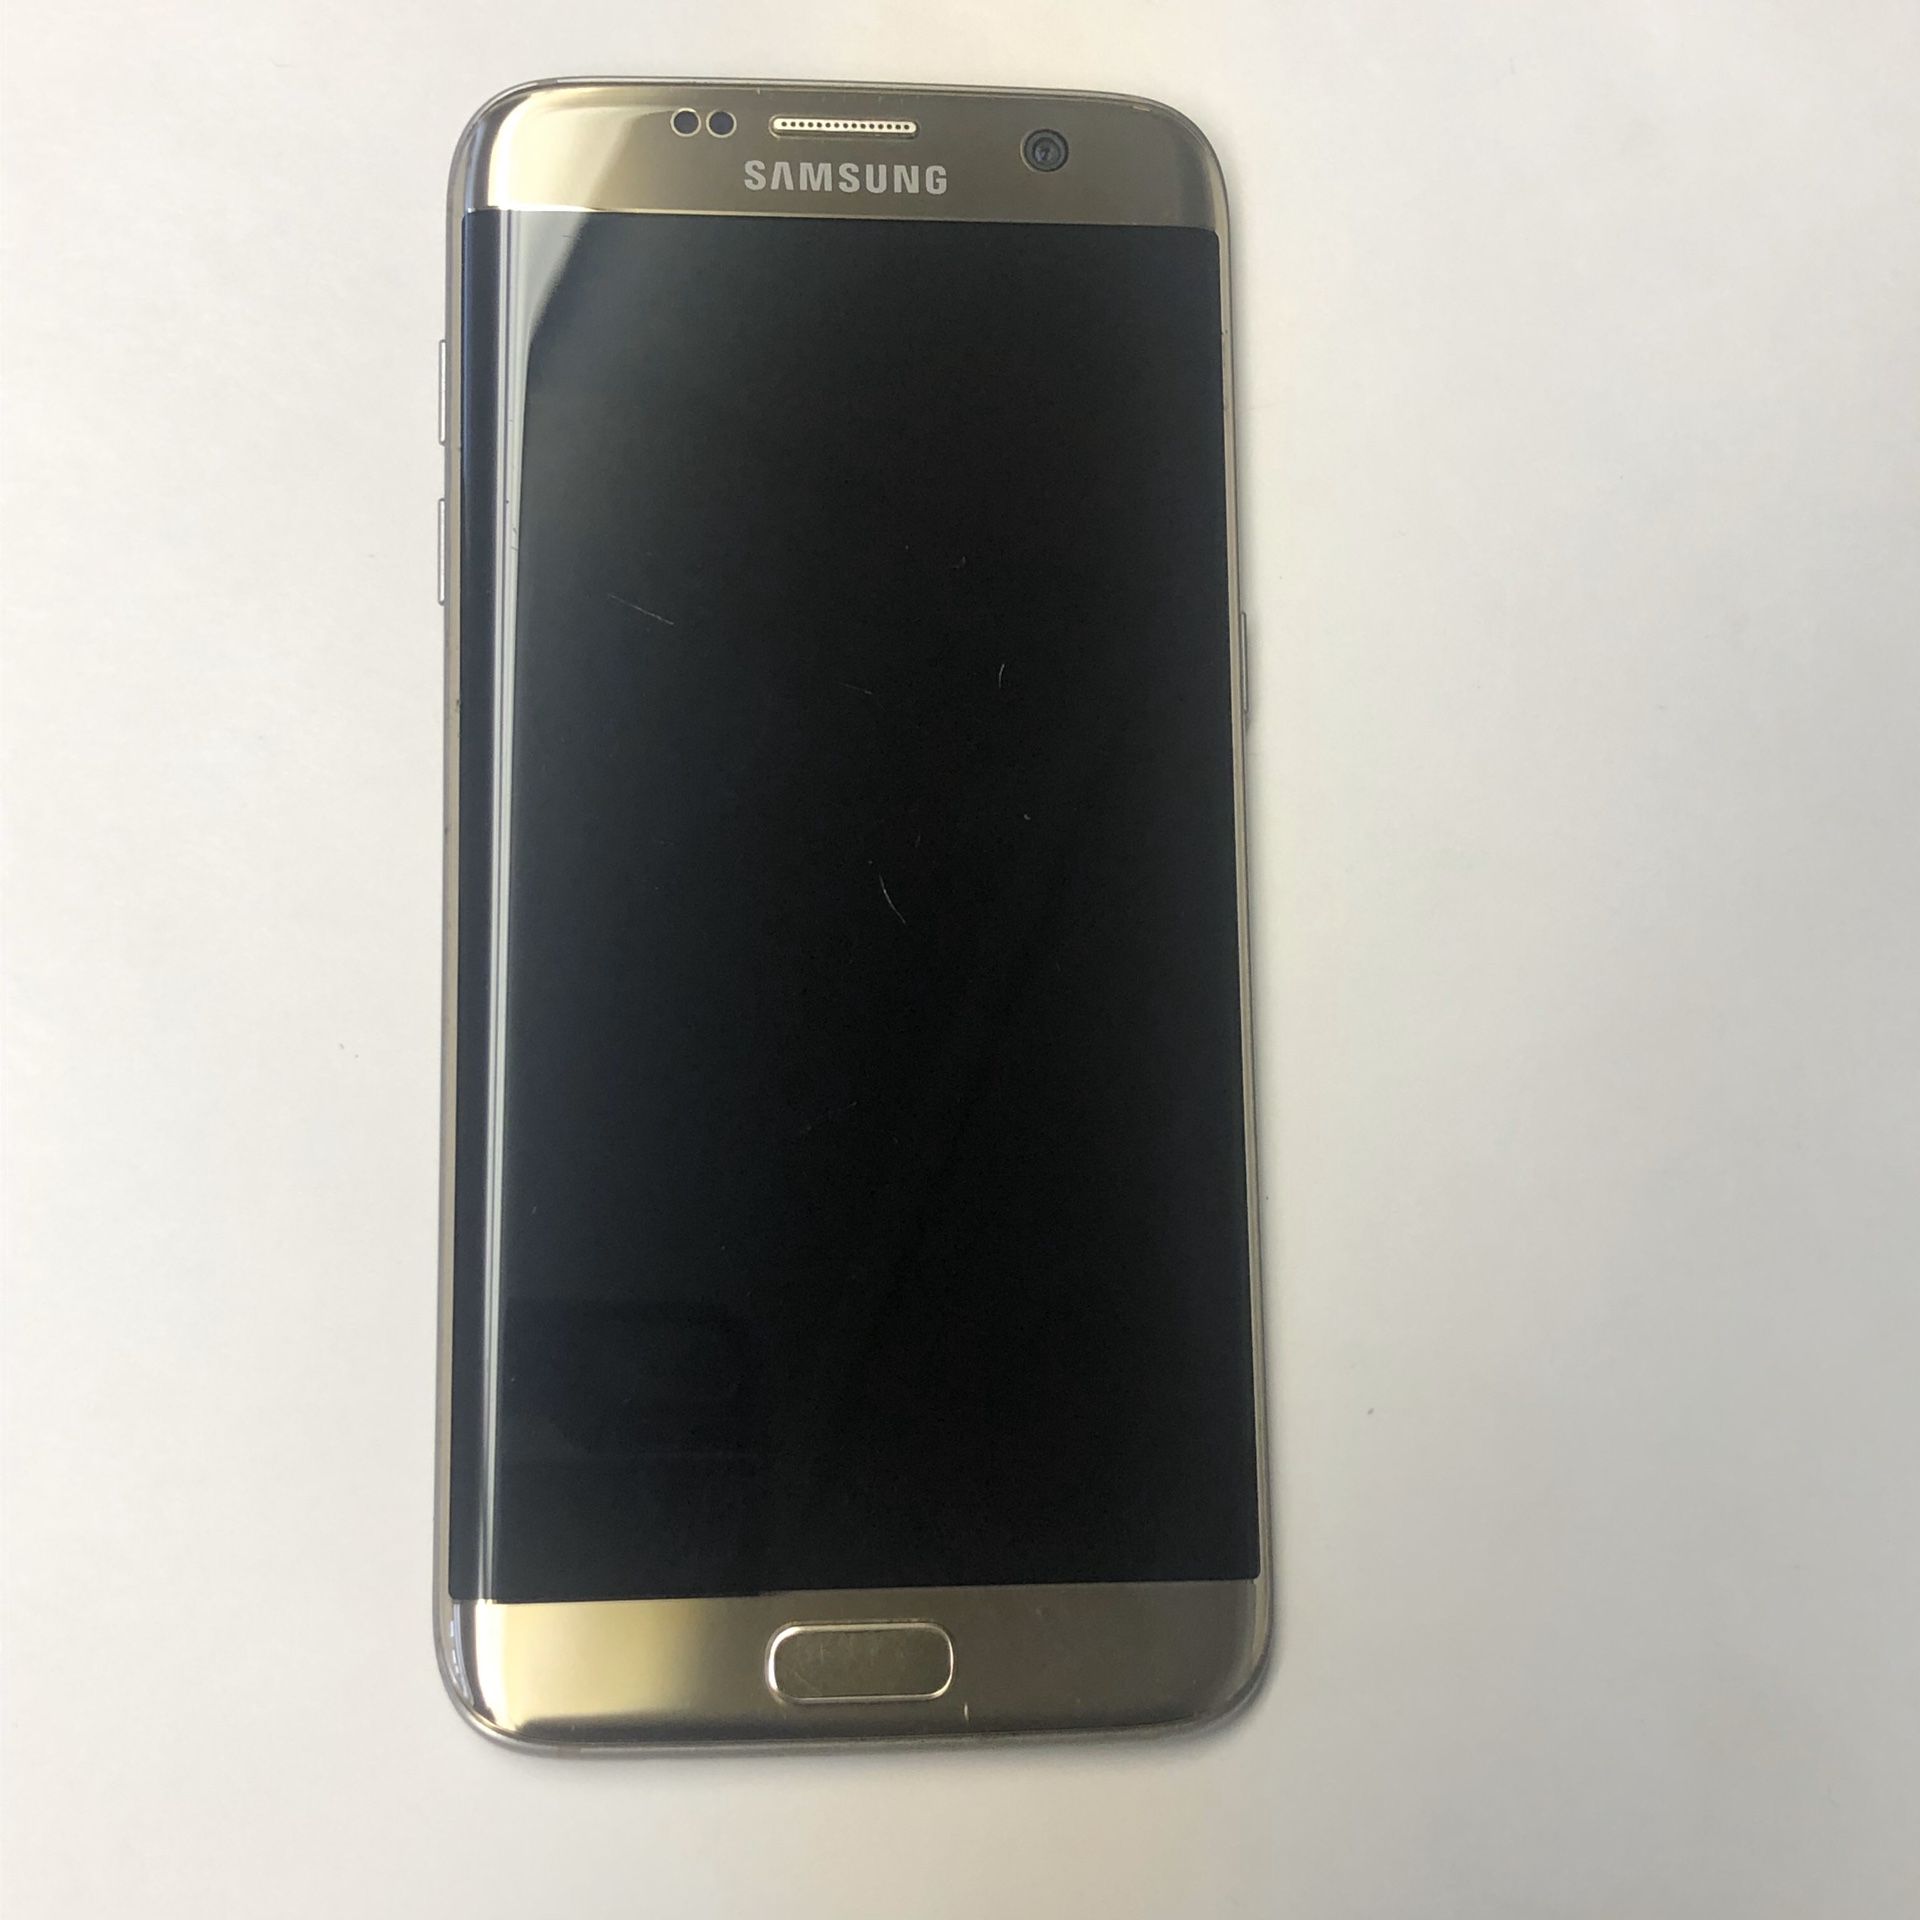 Samsung Galaxy S7 edge - 32GB - Gold Platinum